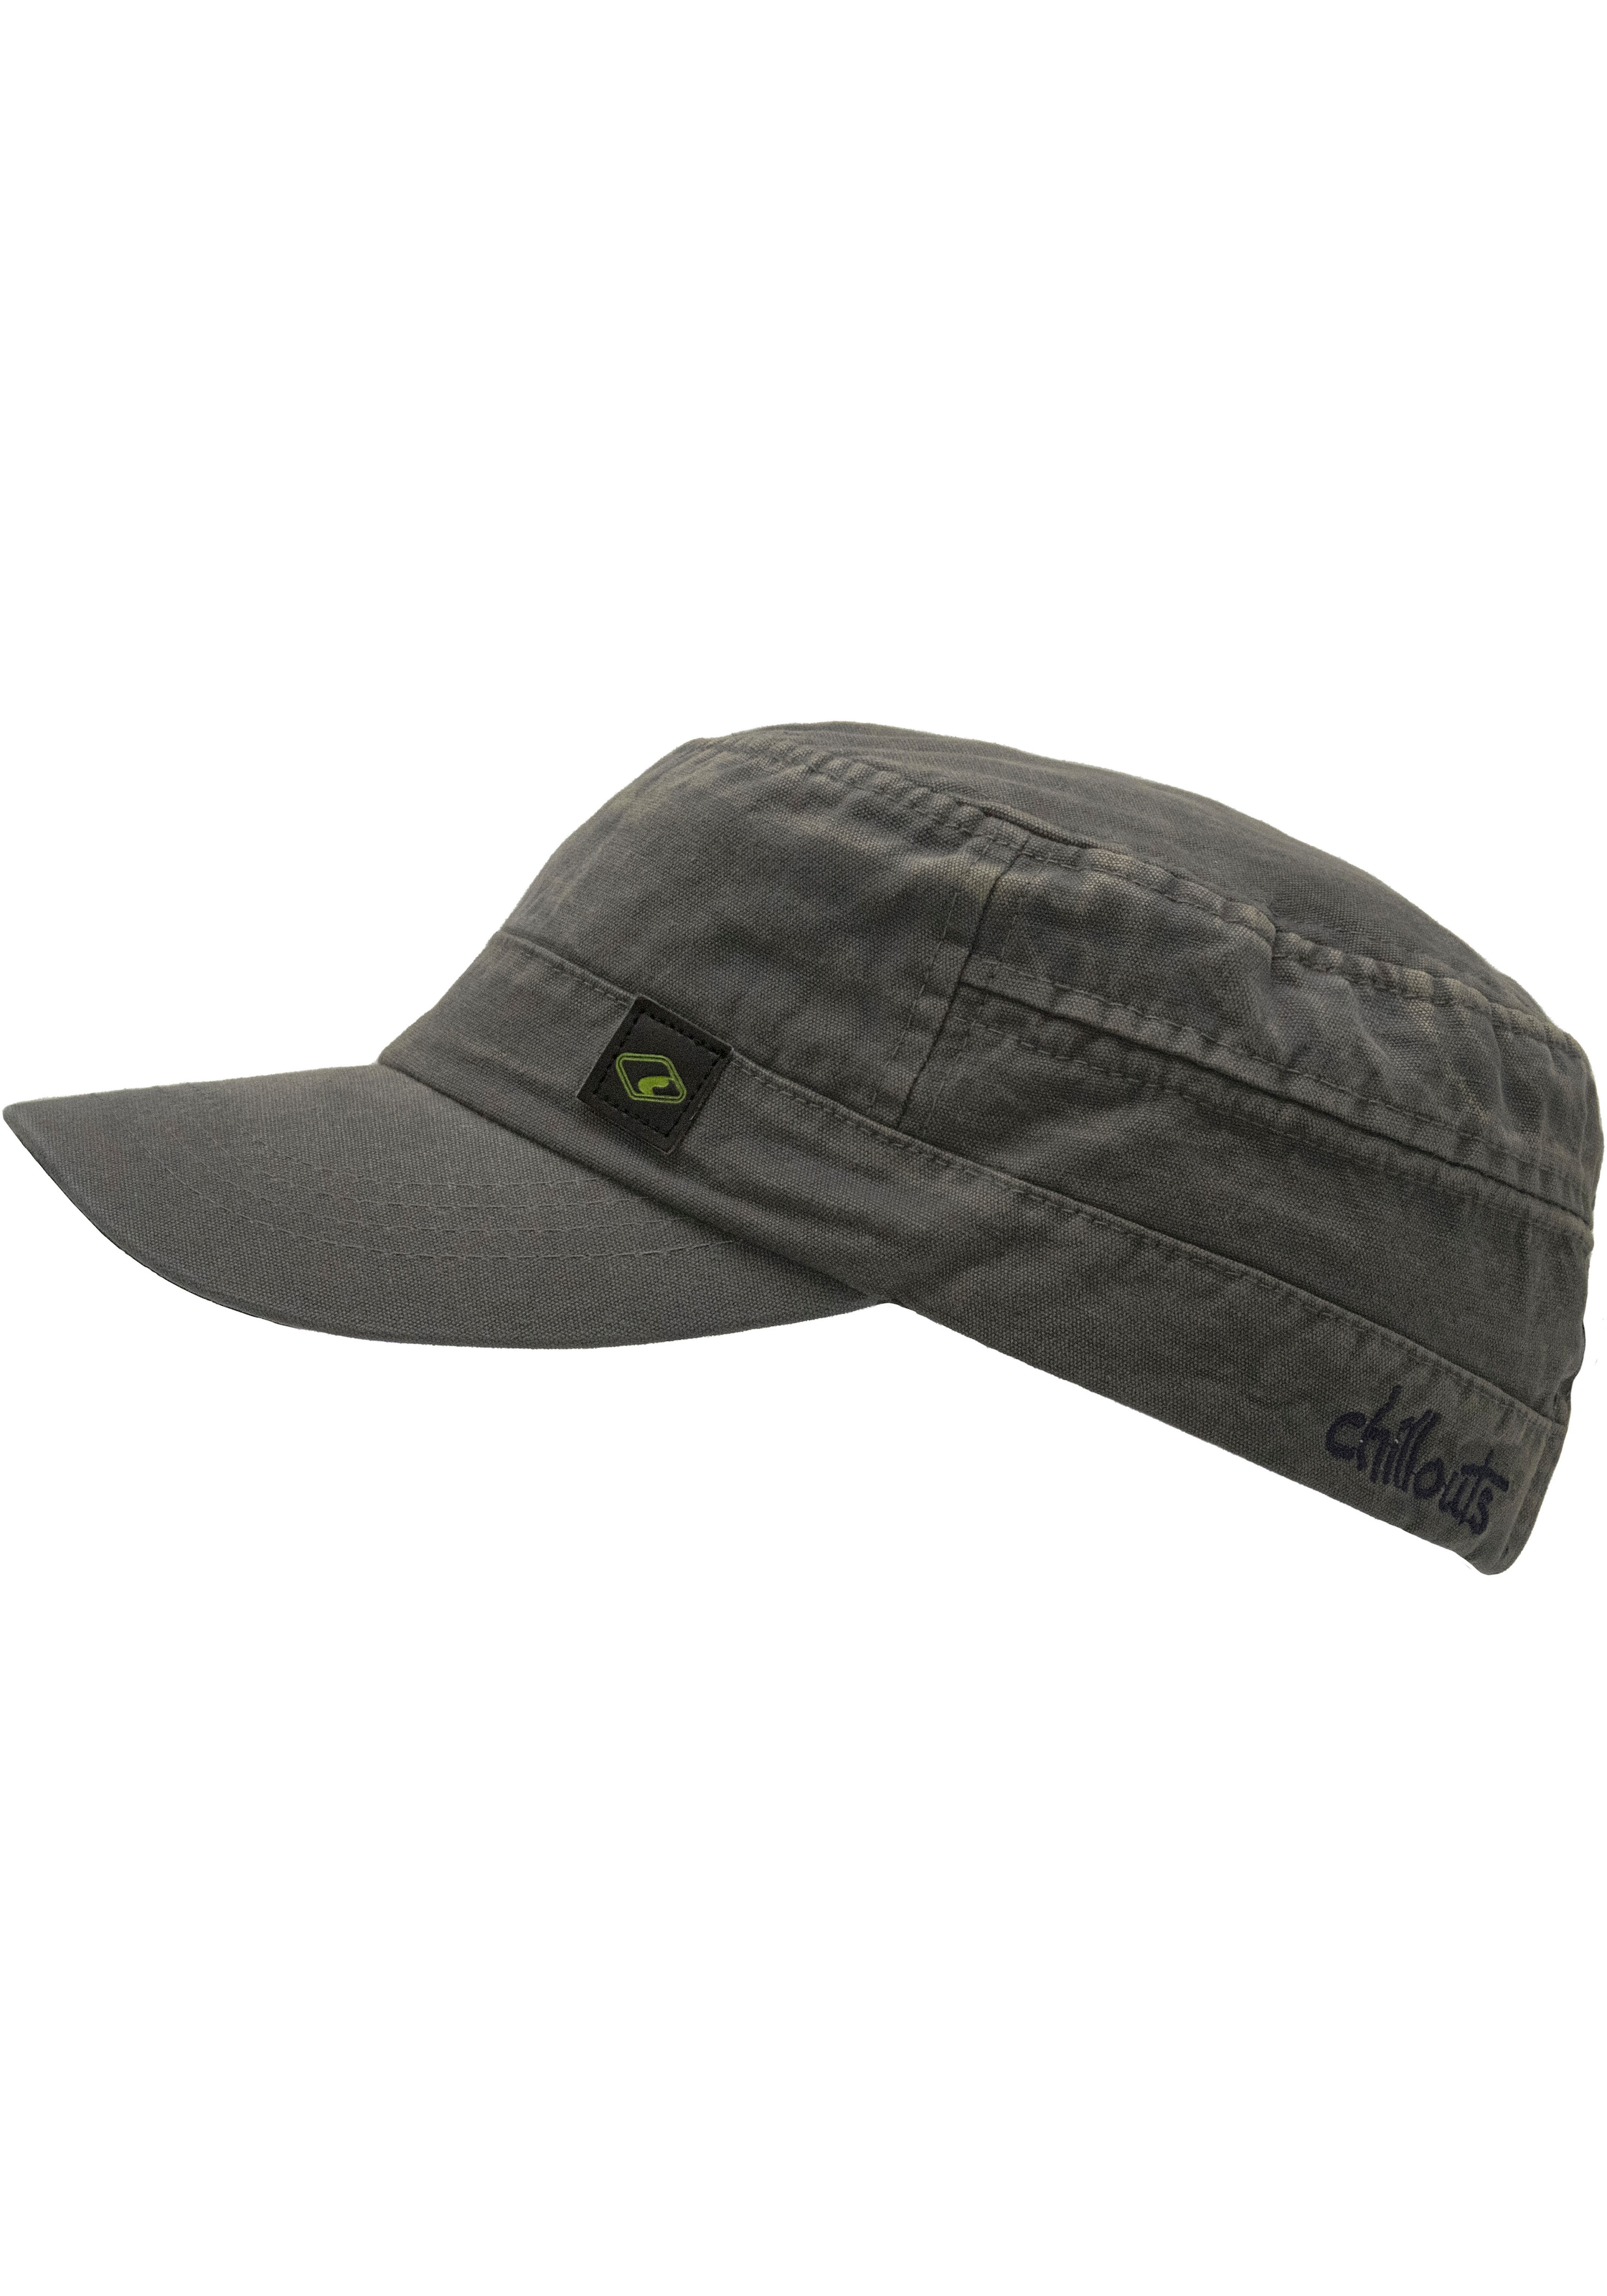 chillouts Army Cap »El Paso Hat«, aus reiner Baumwolle, atmungsaktiv, One  Size online shoppen bei OTTO | Army Caps